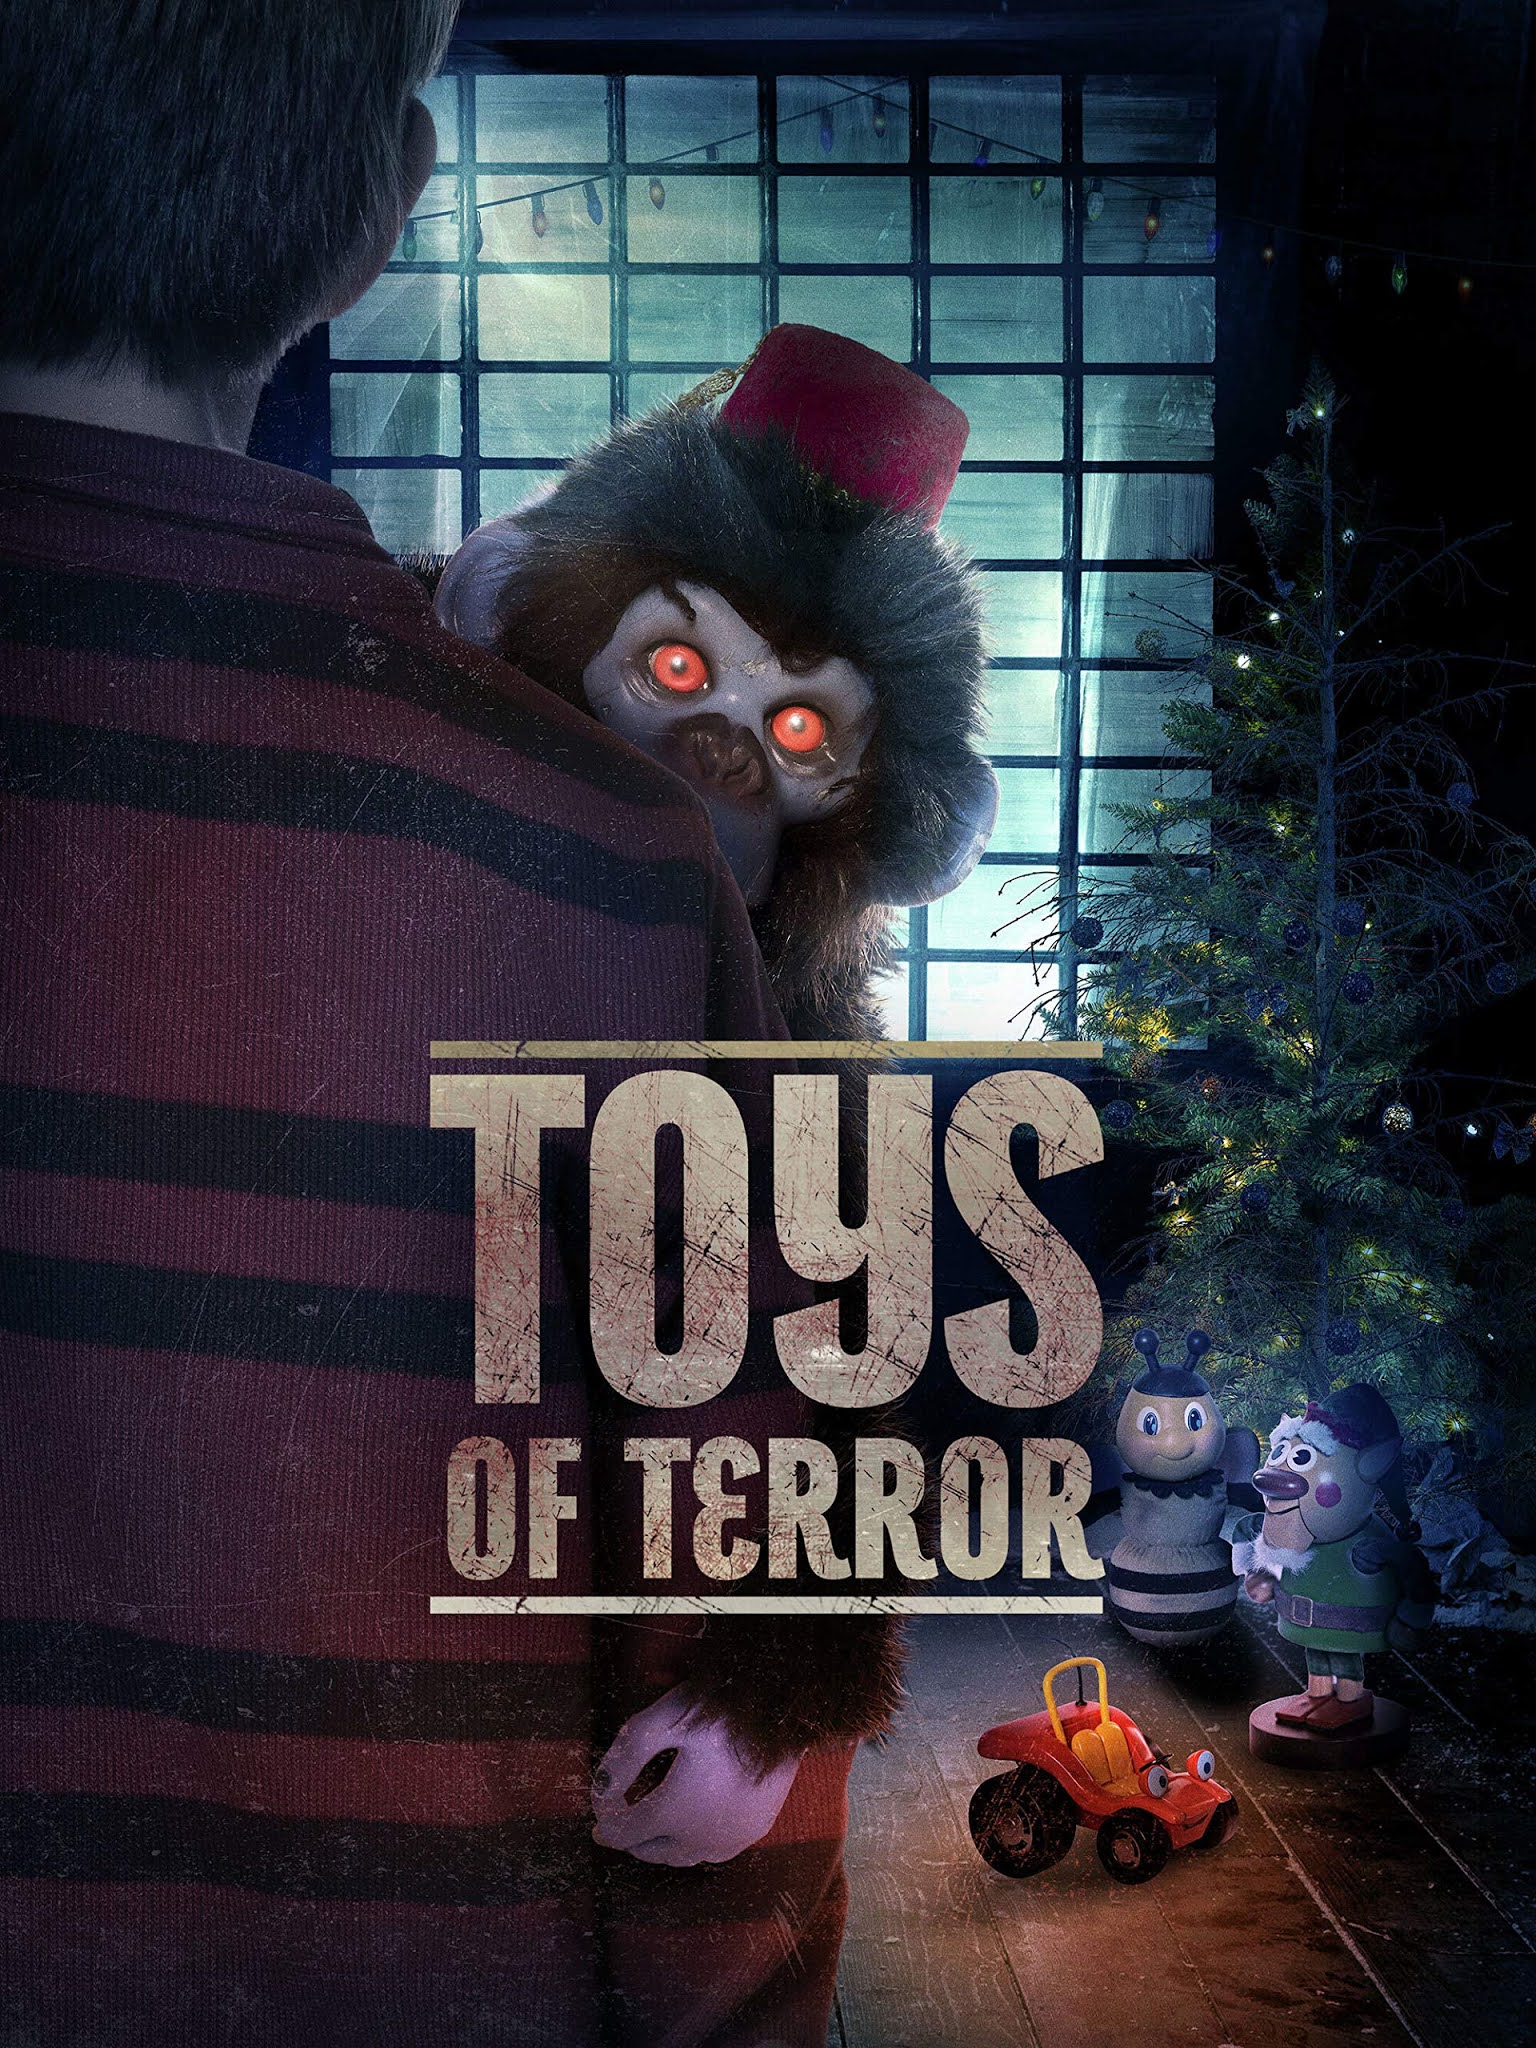 Descargar Juguetes de Terror (Toys of Terror) MP4 HD720p Latino